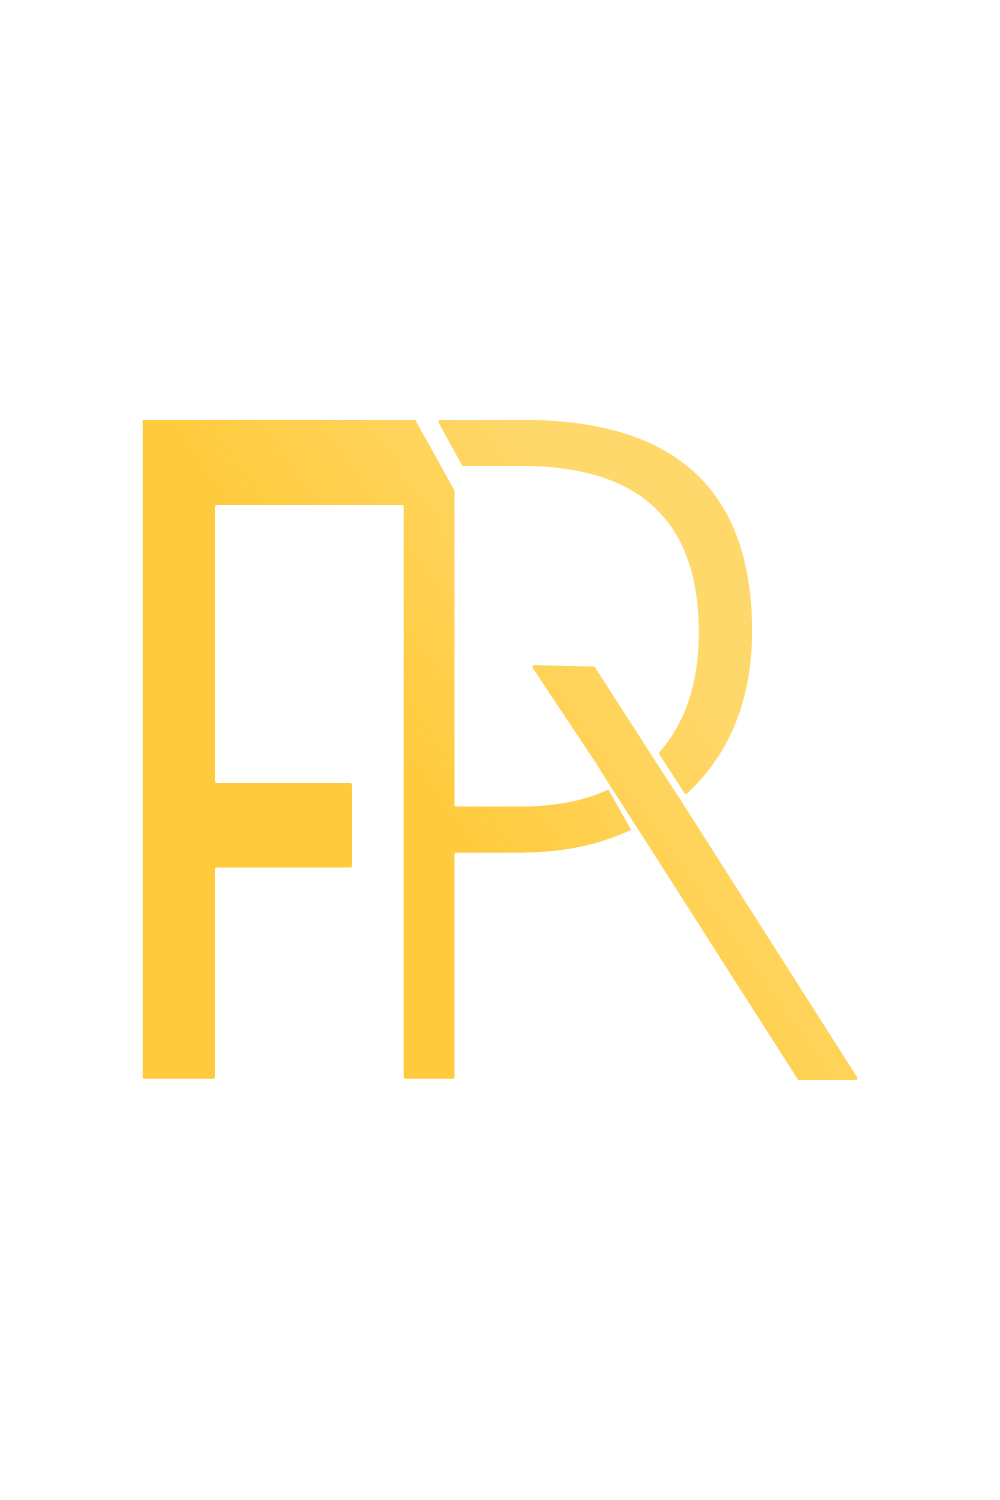 Initials FR letters logo design vector template illustration RF logo design best golden color icon pinterest preview image.